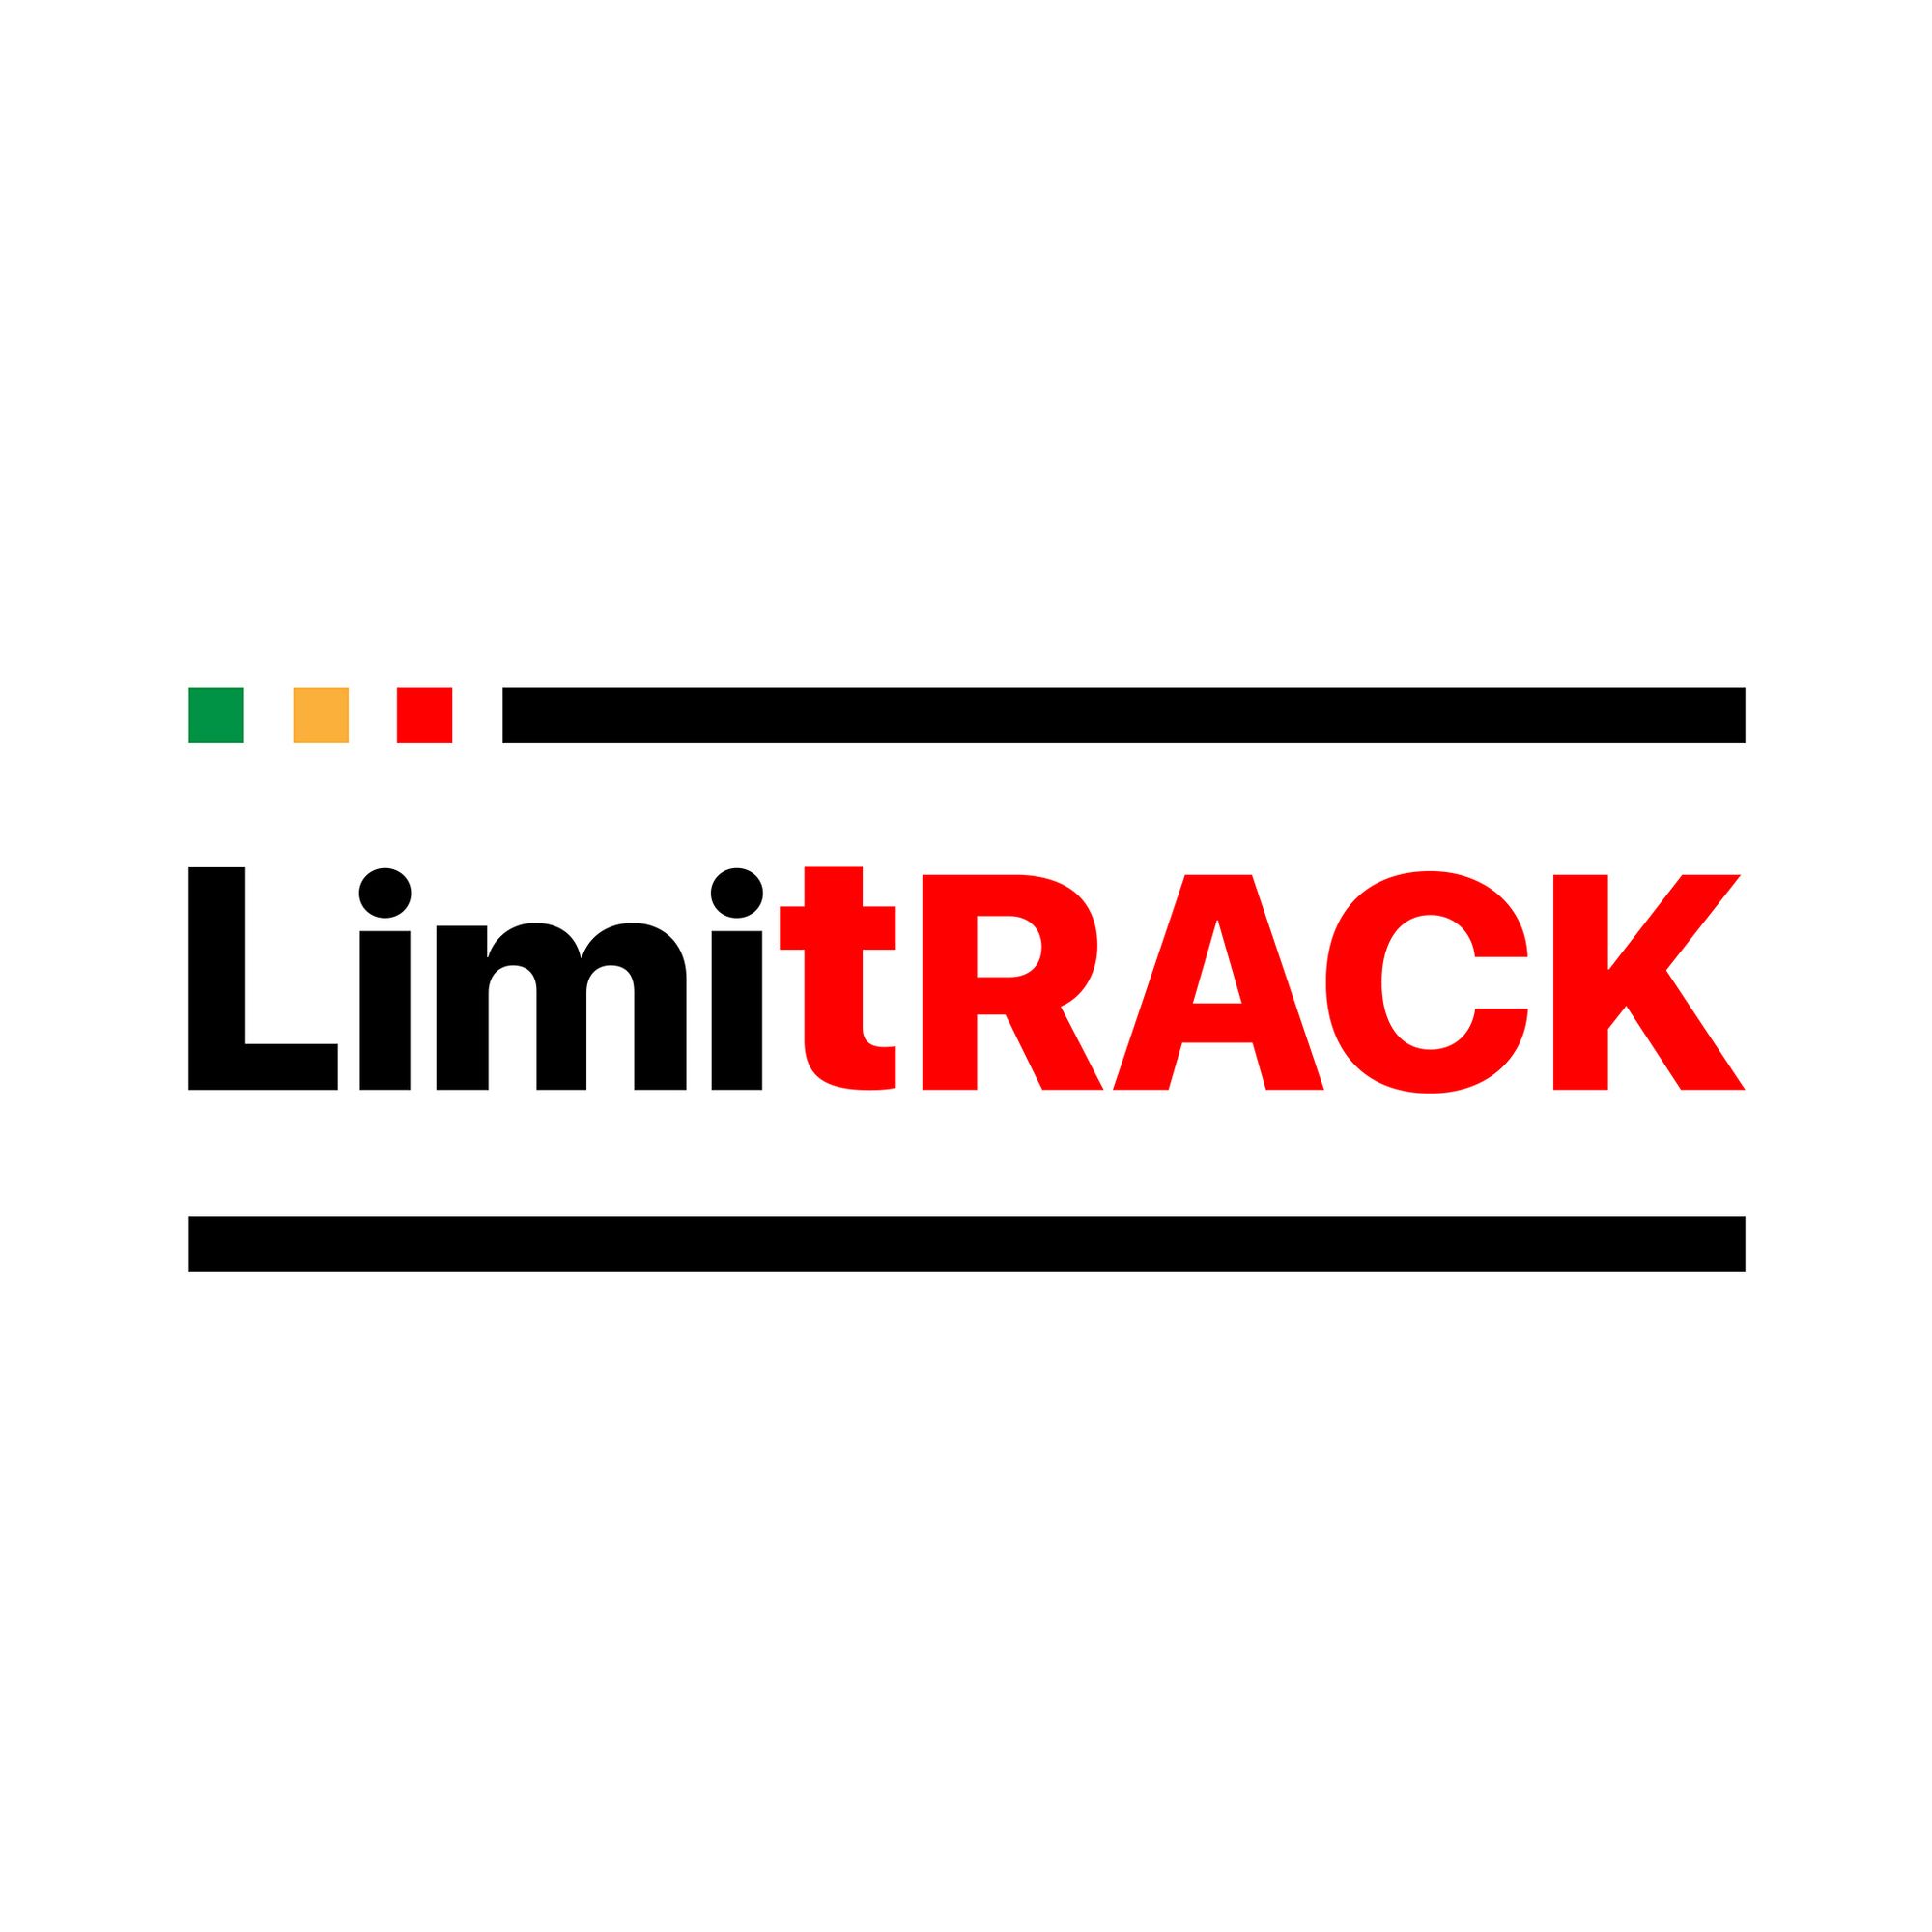 Limitrack Blog